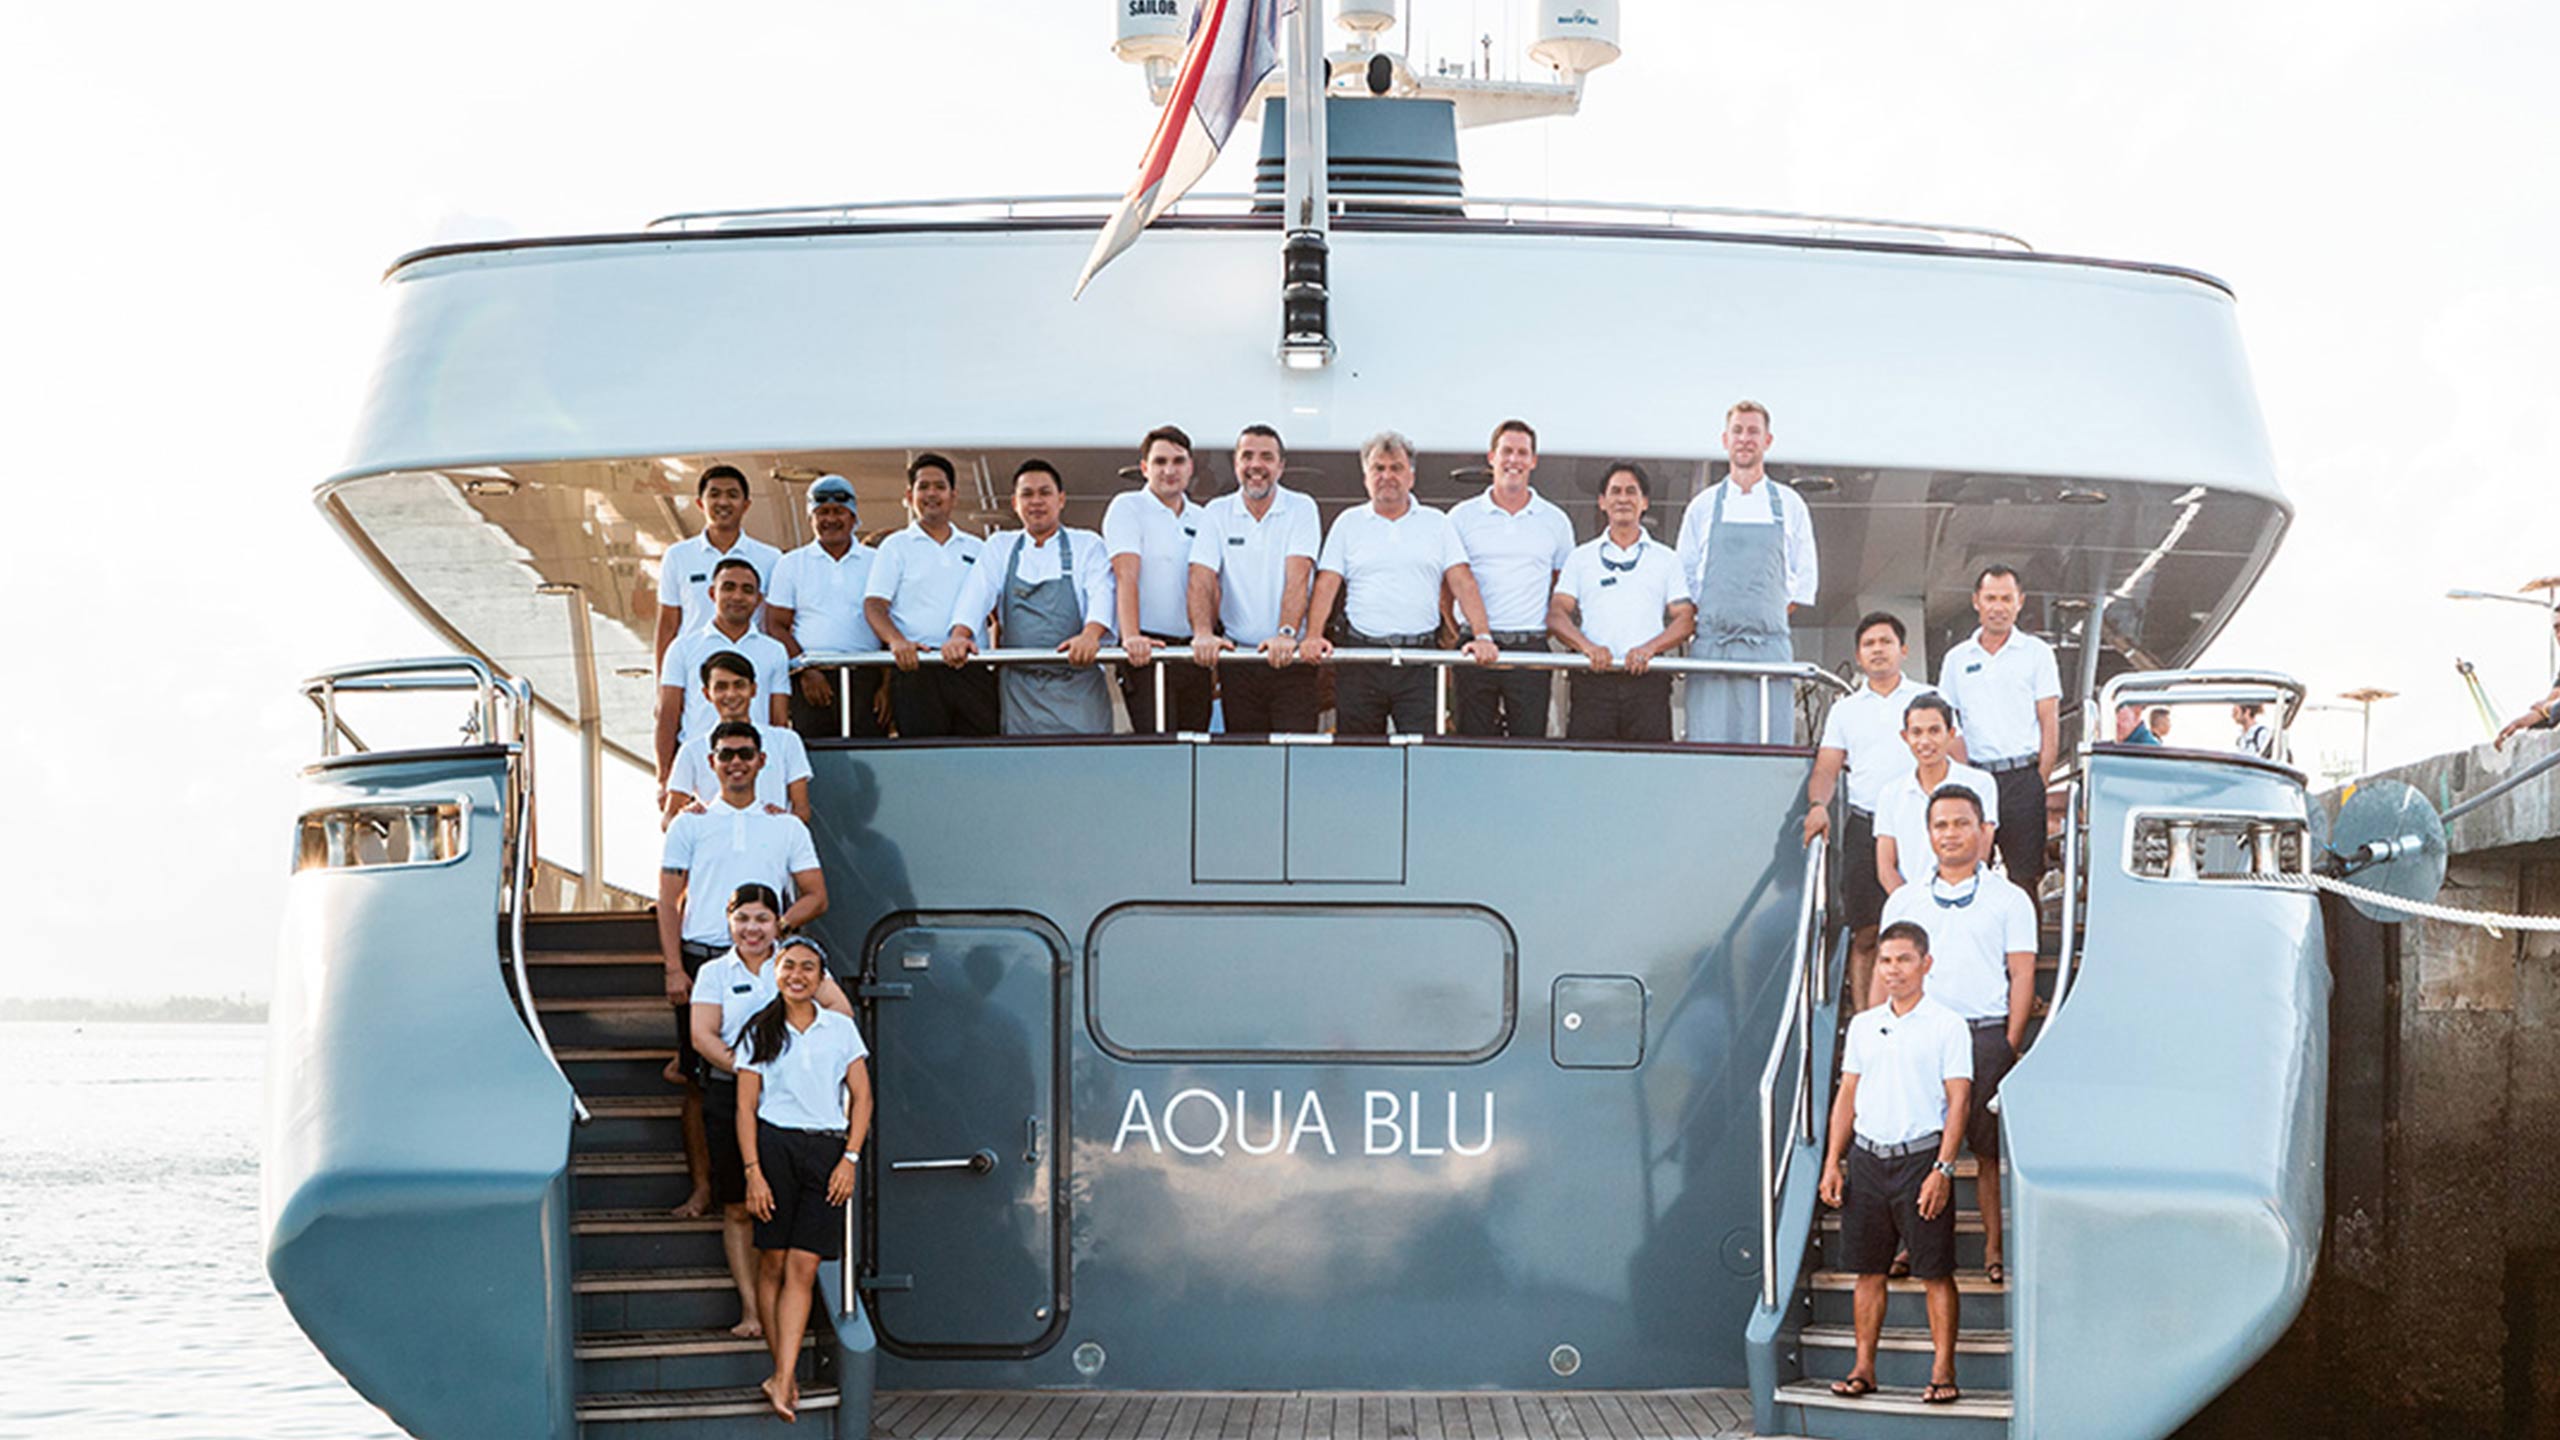 aqua-blu-bali-indonesia-team-photo